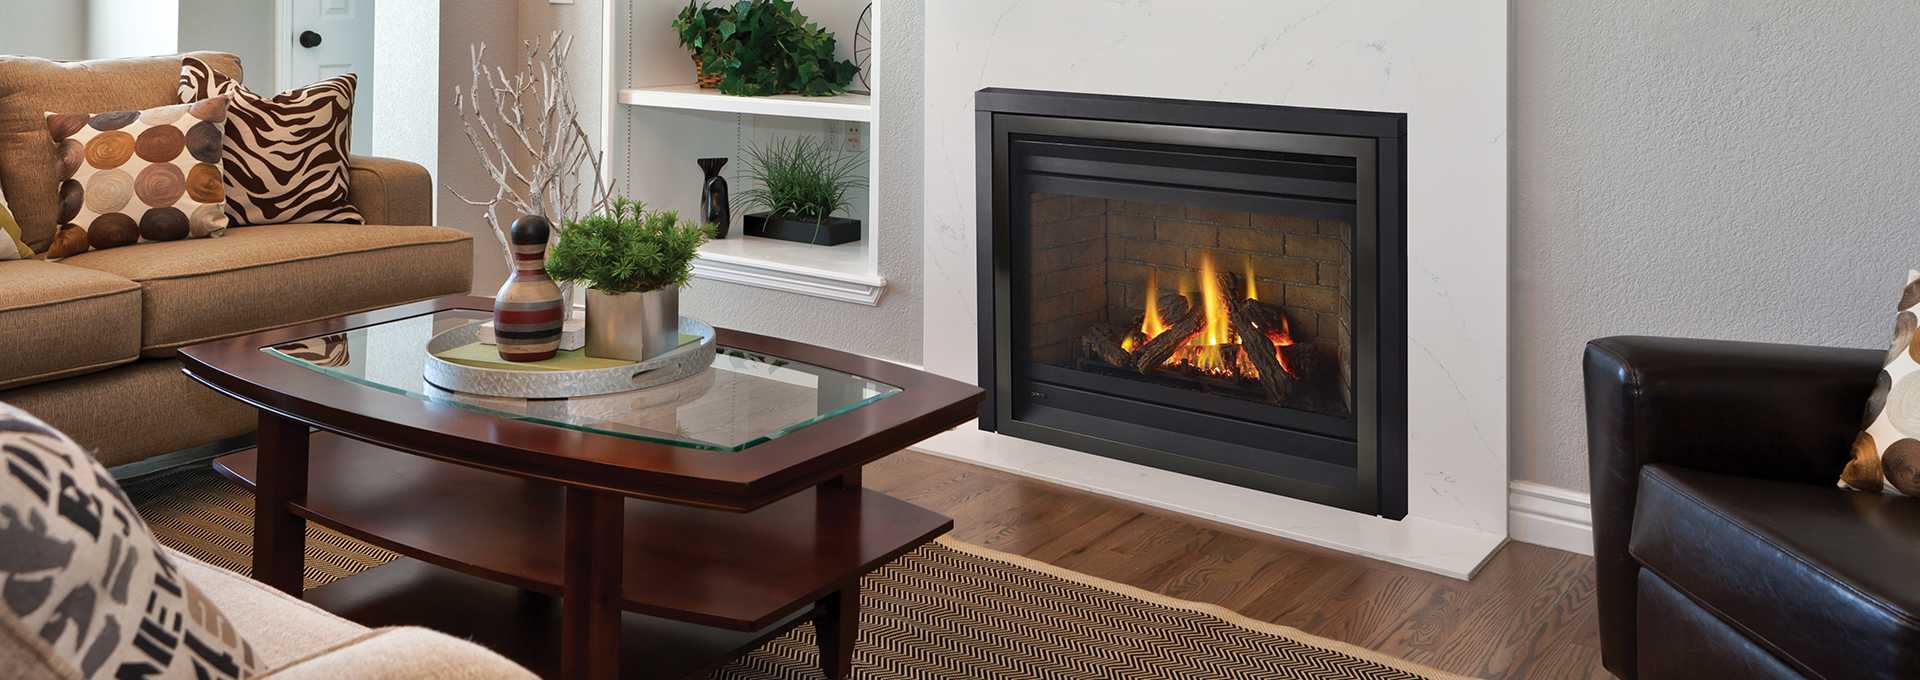 Regency Gas Fireplace Rebate